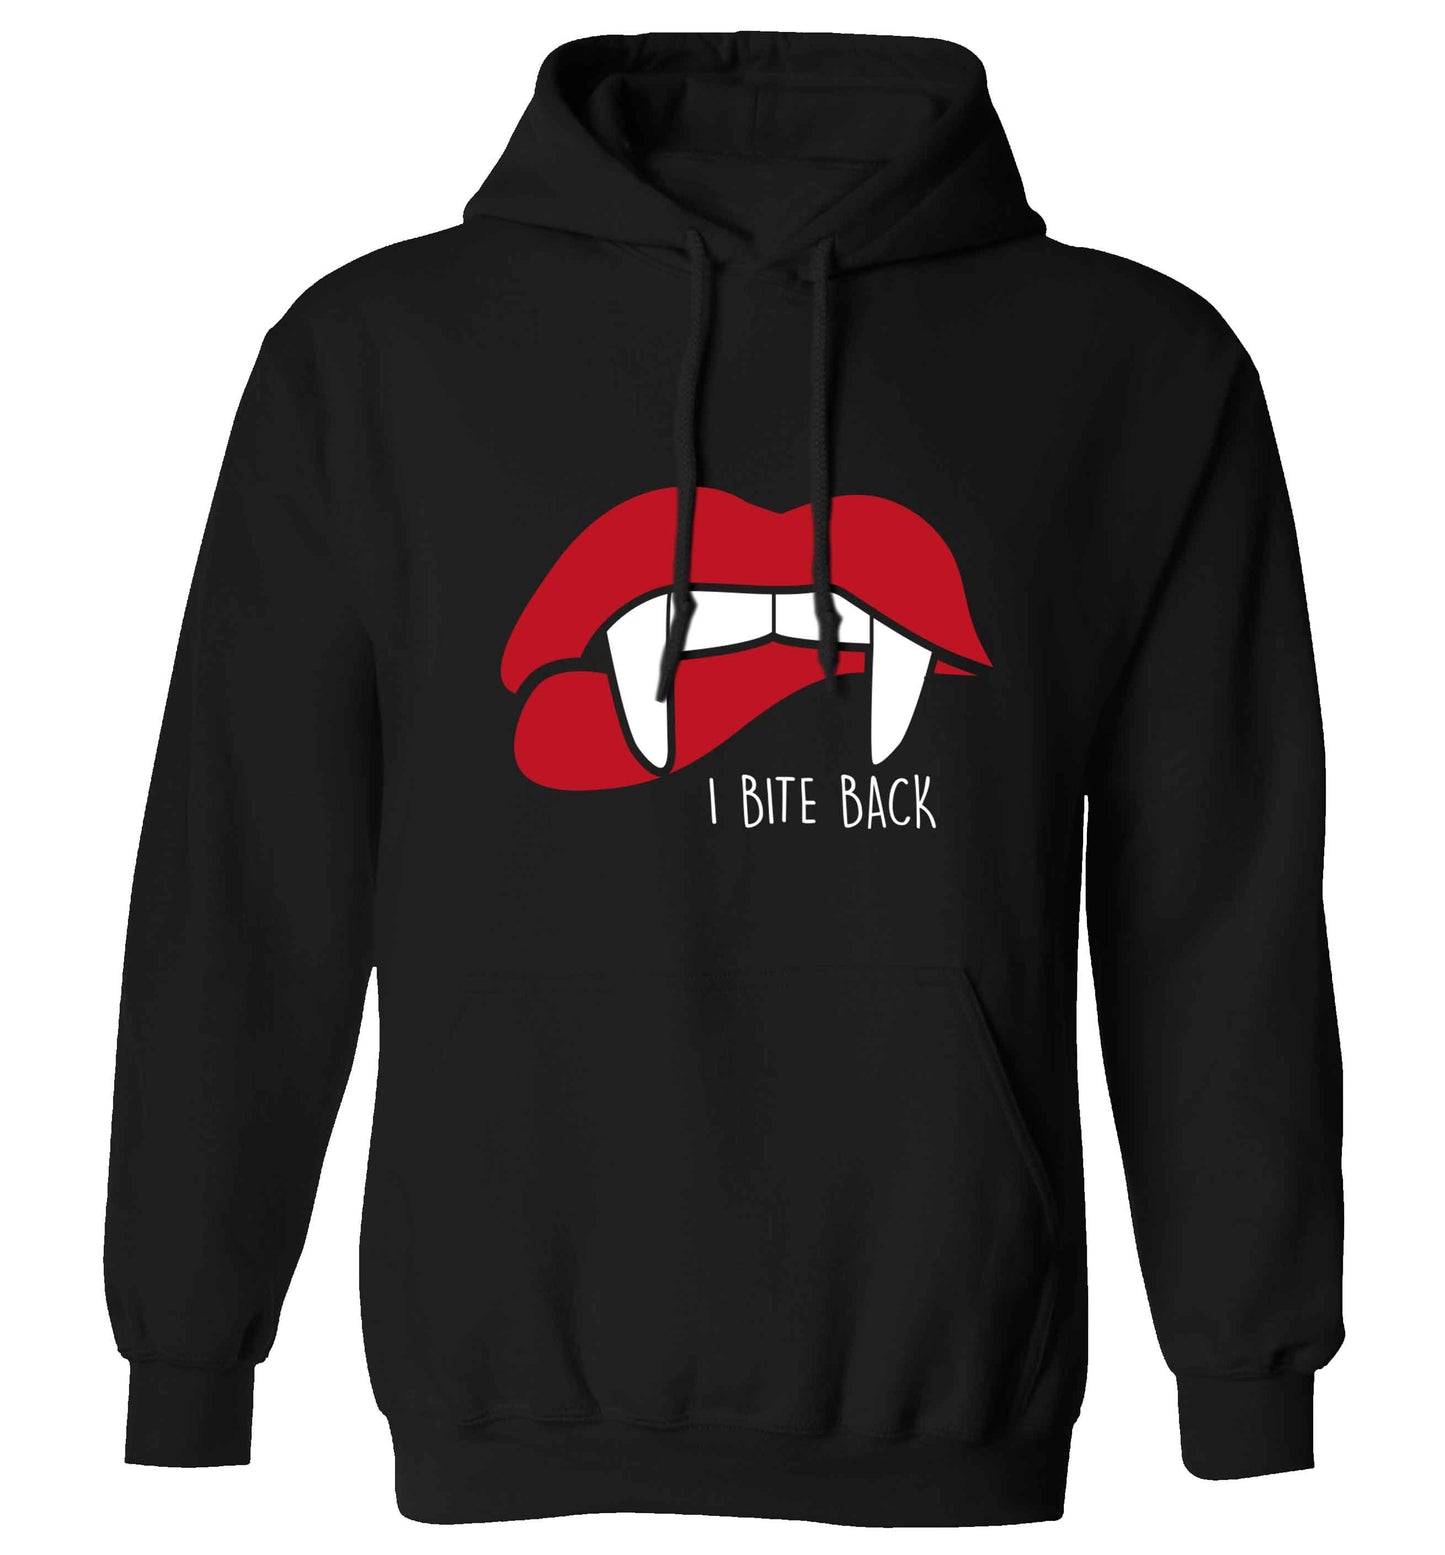 I bite back adults unisex black hoodie 2XL